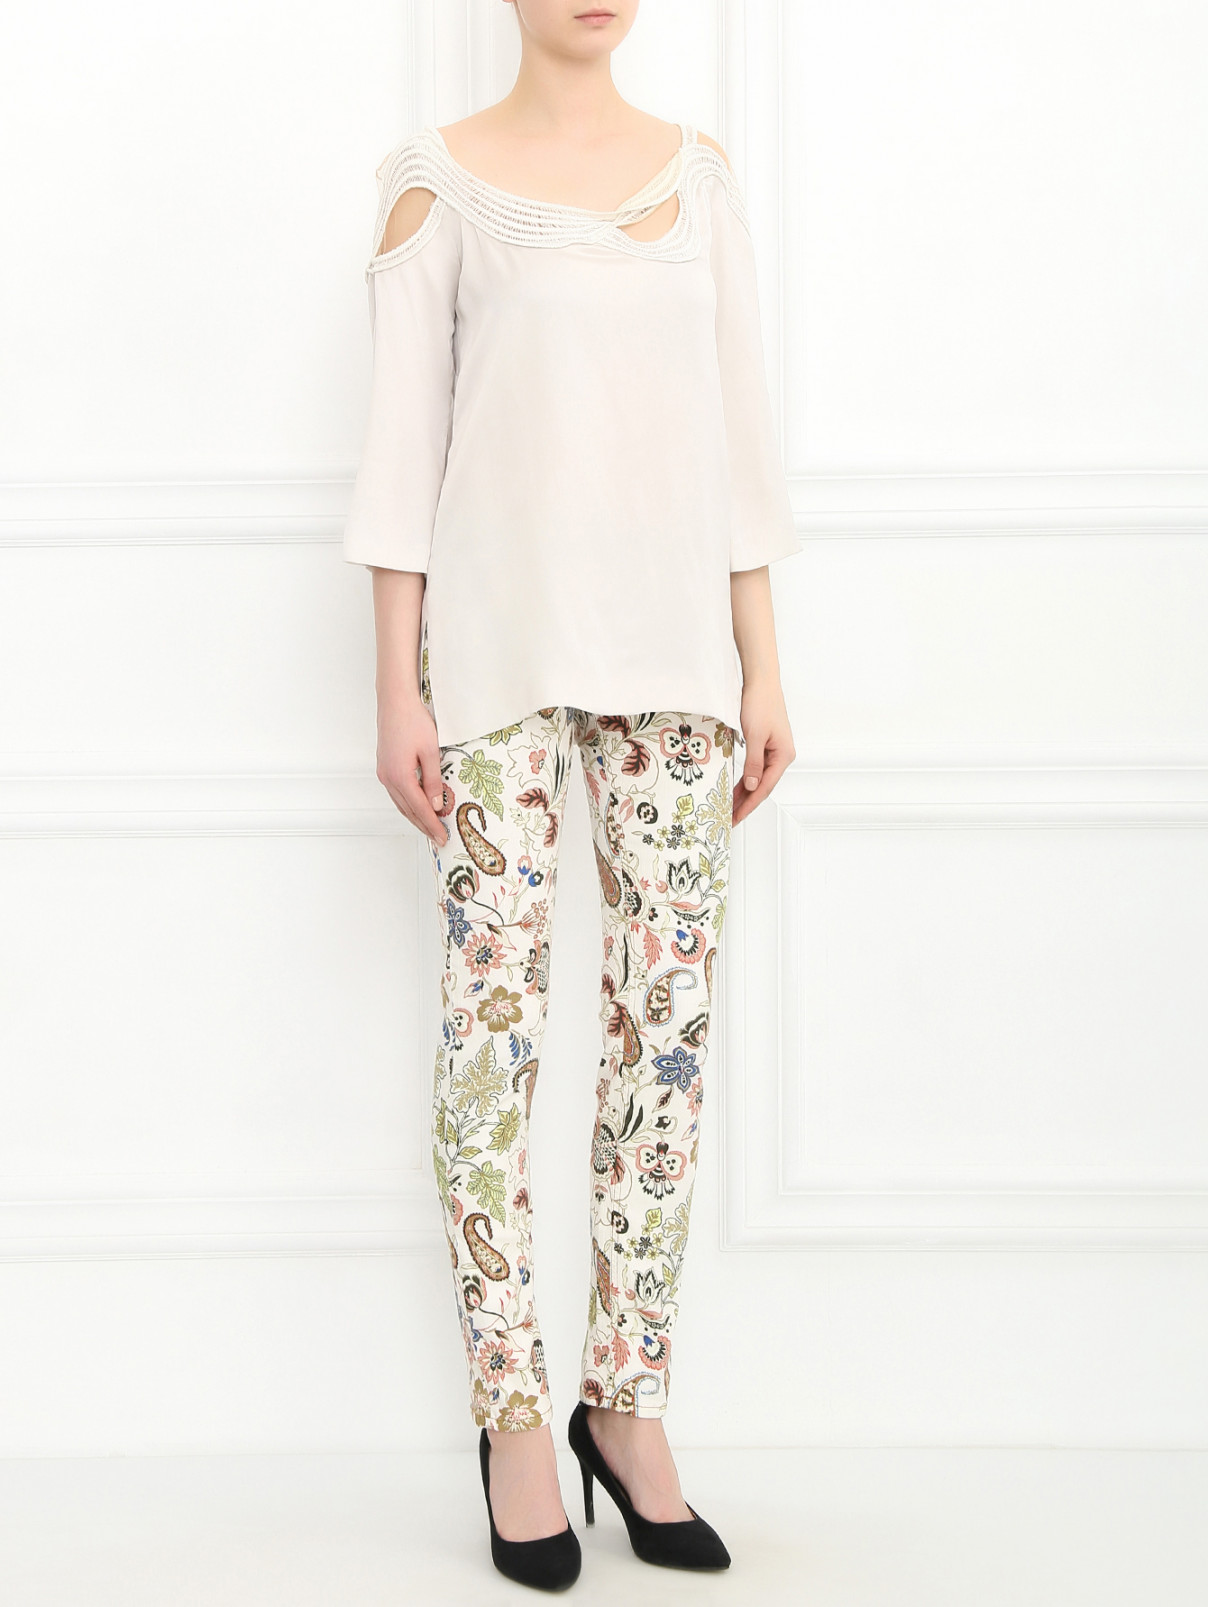 Блуза из шелка с рукавами 3/4 Alberta Ferretti  –  Модель Общий вид  – Цвет:  Белый